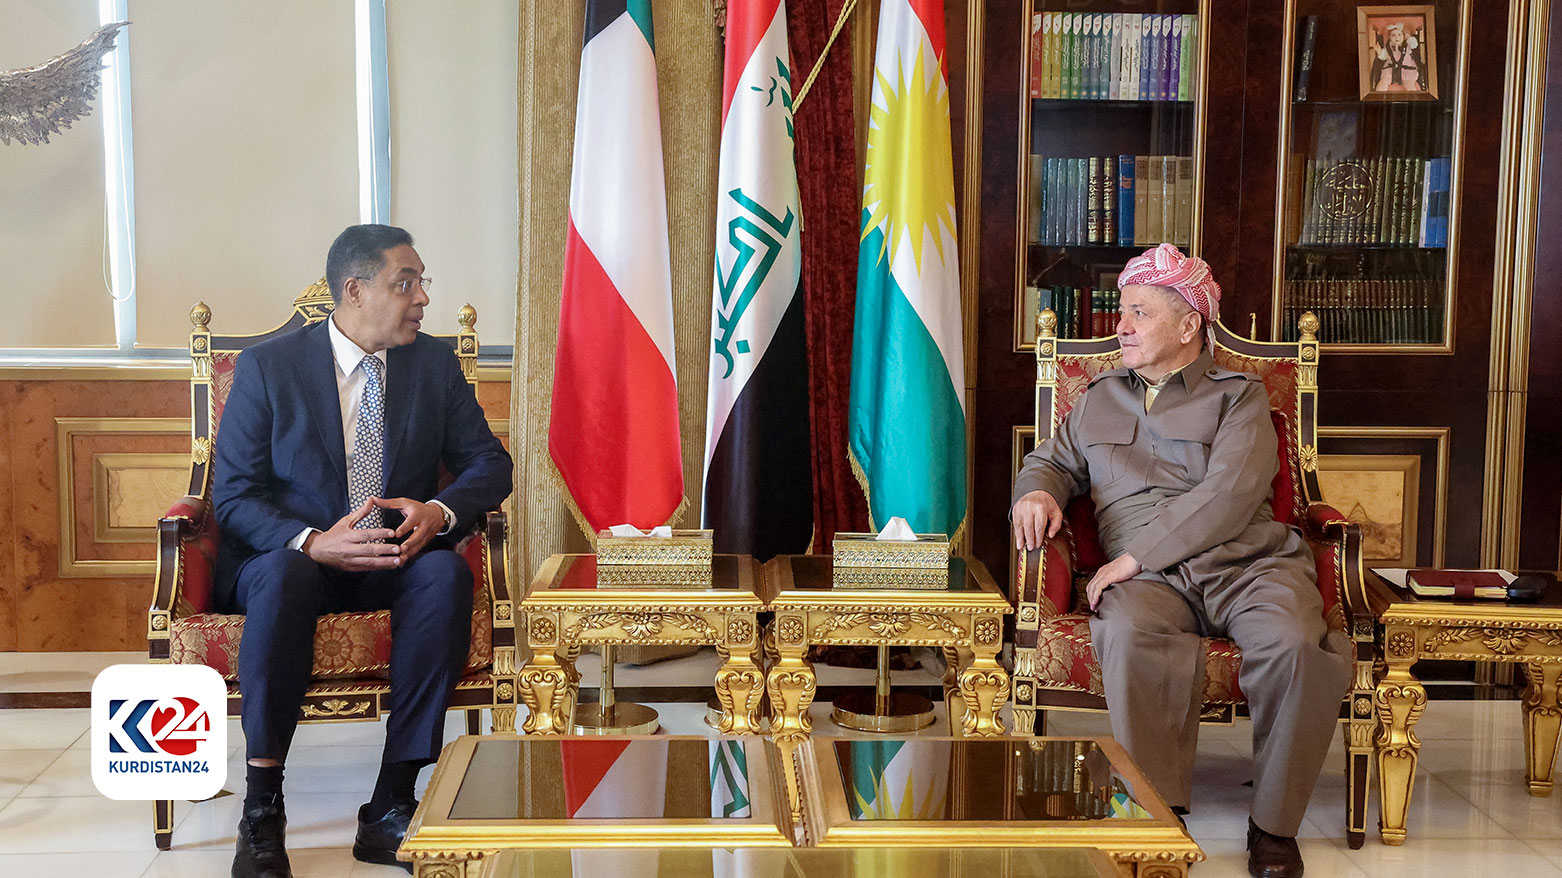 Nechirvan Barzani King Abdullah II discuss the regions latest developments